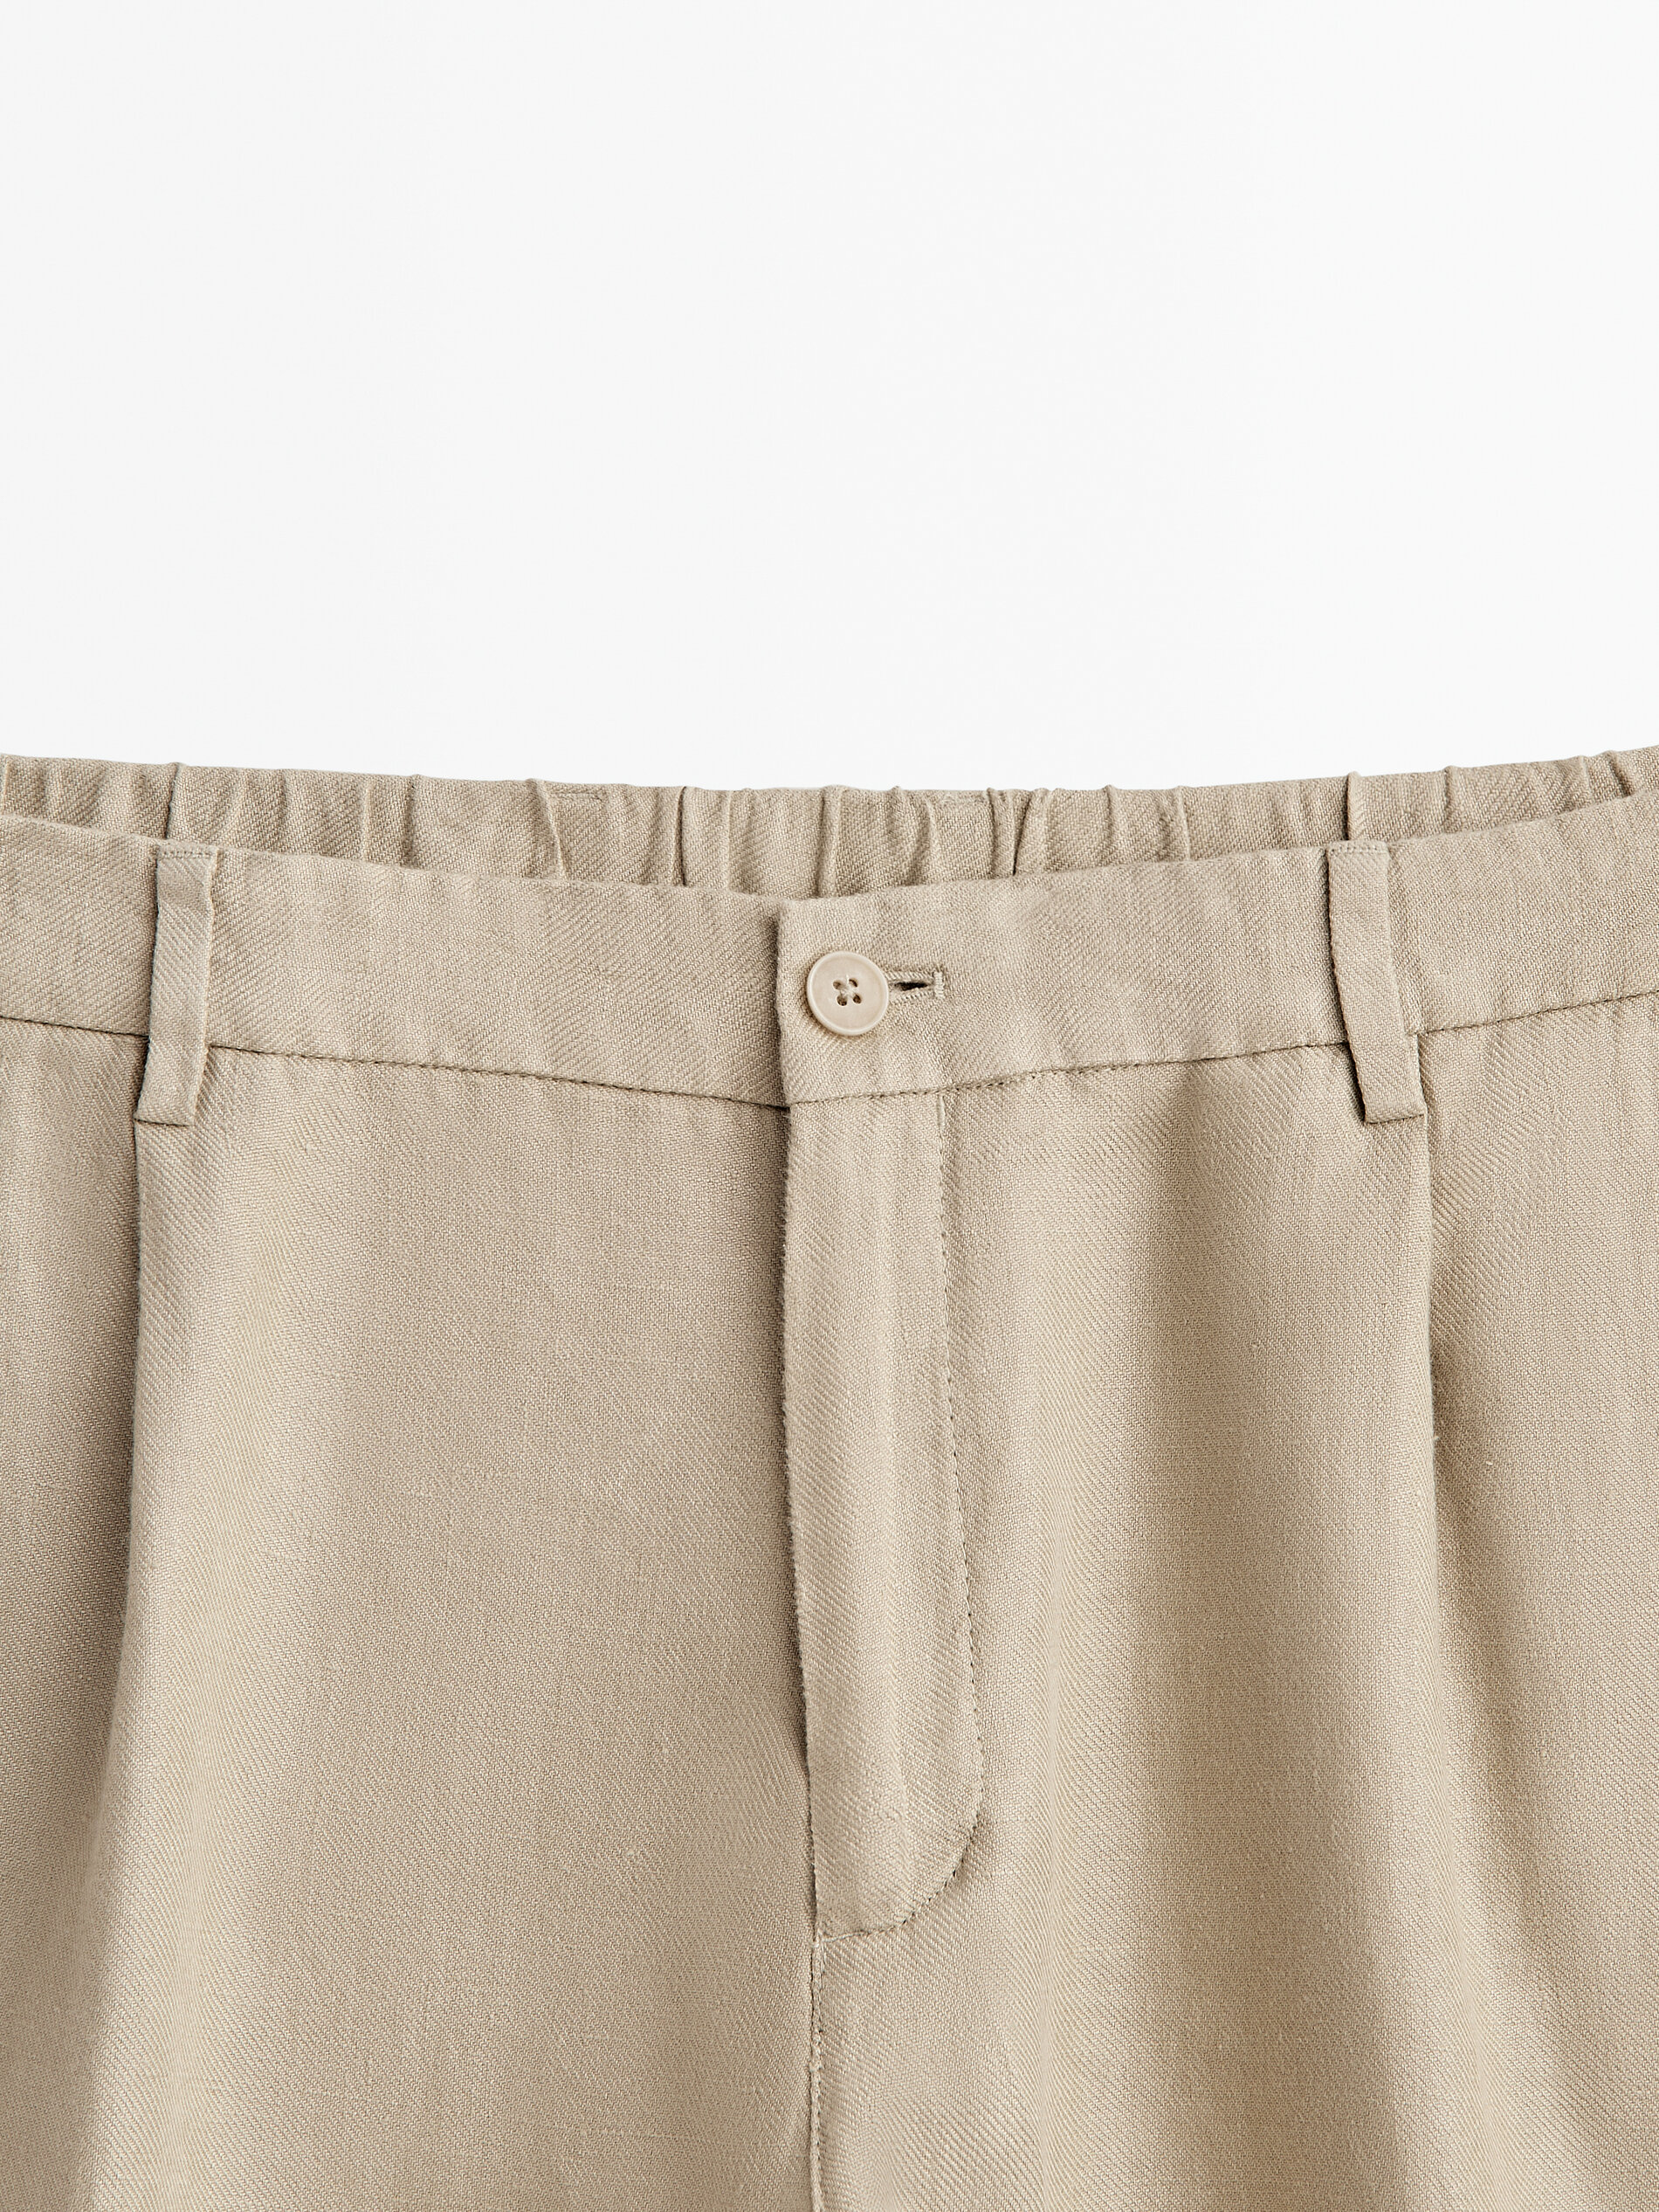 Massimo Dutti Womens Pants Satin Trousers Flowy Yellow US 4 EU 36 5002/512  NWT | eBay